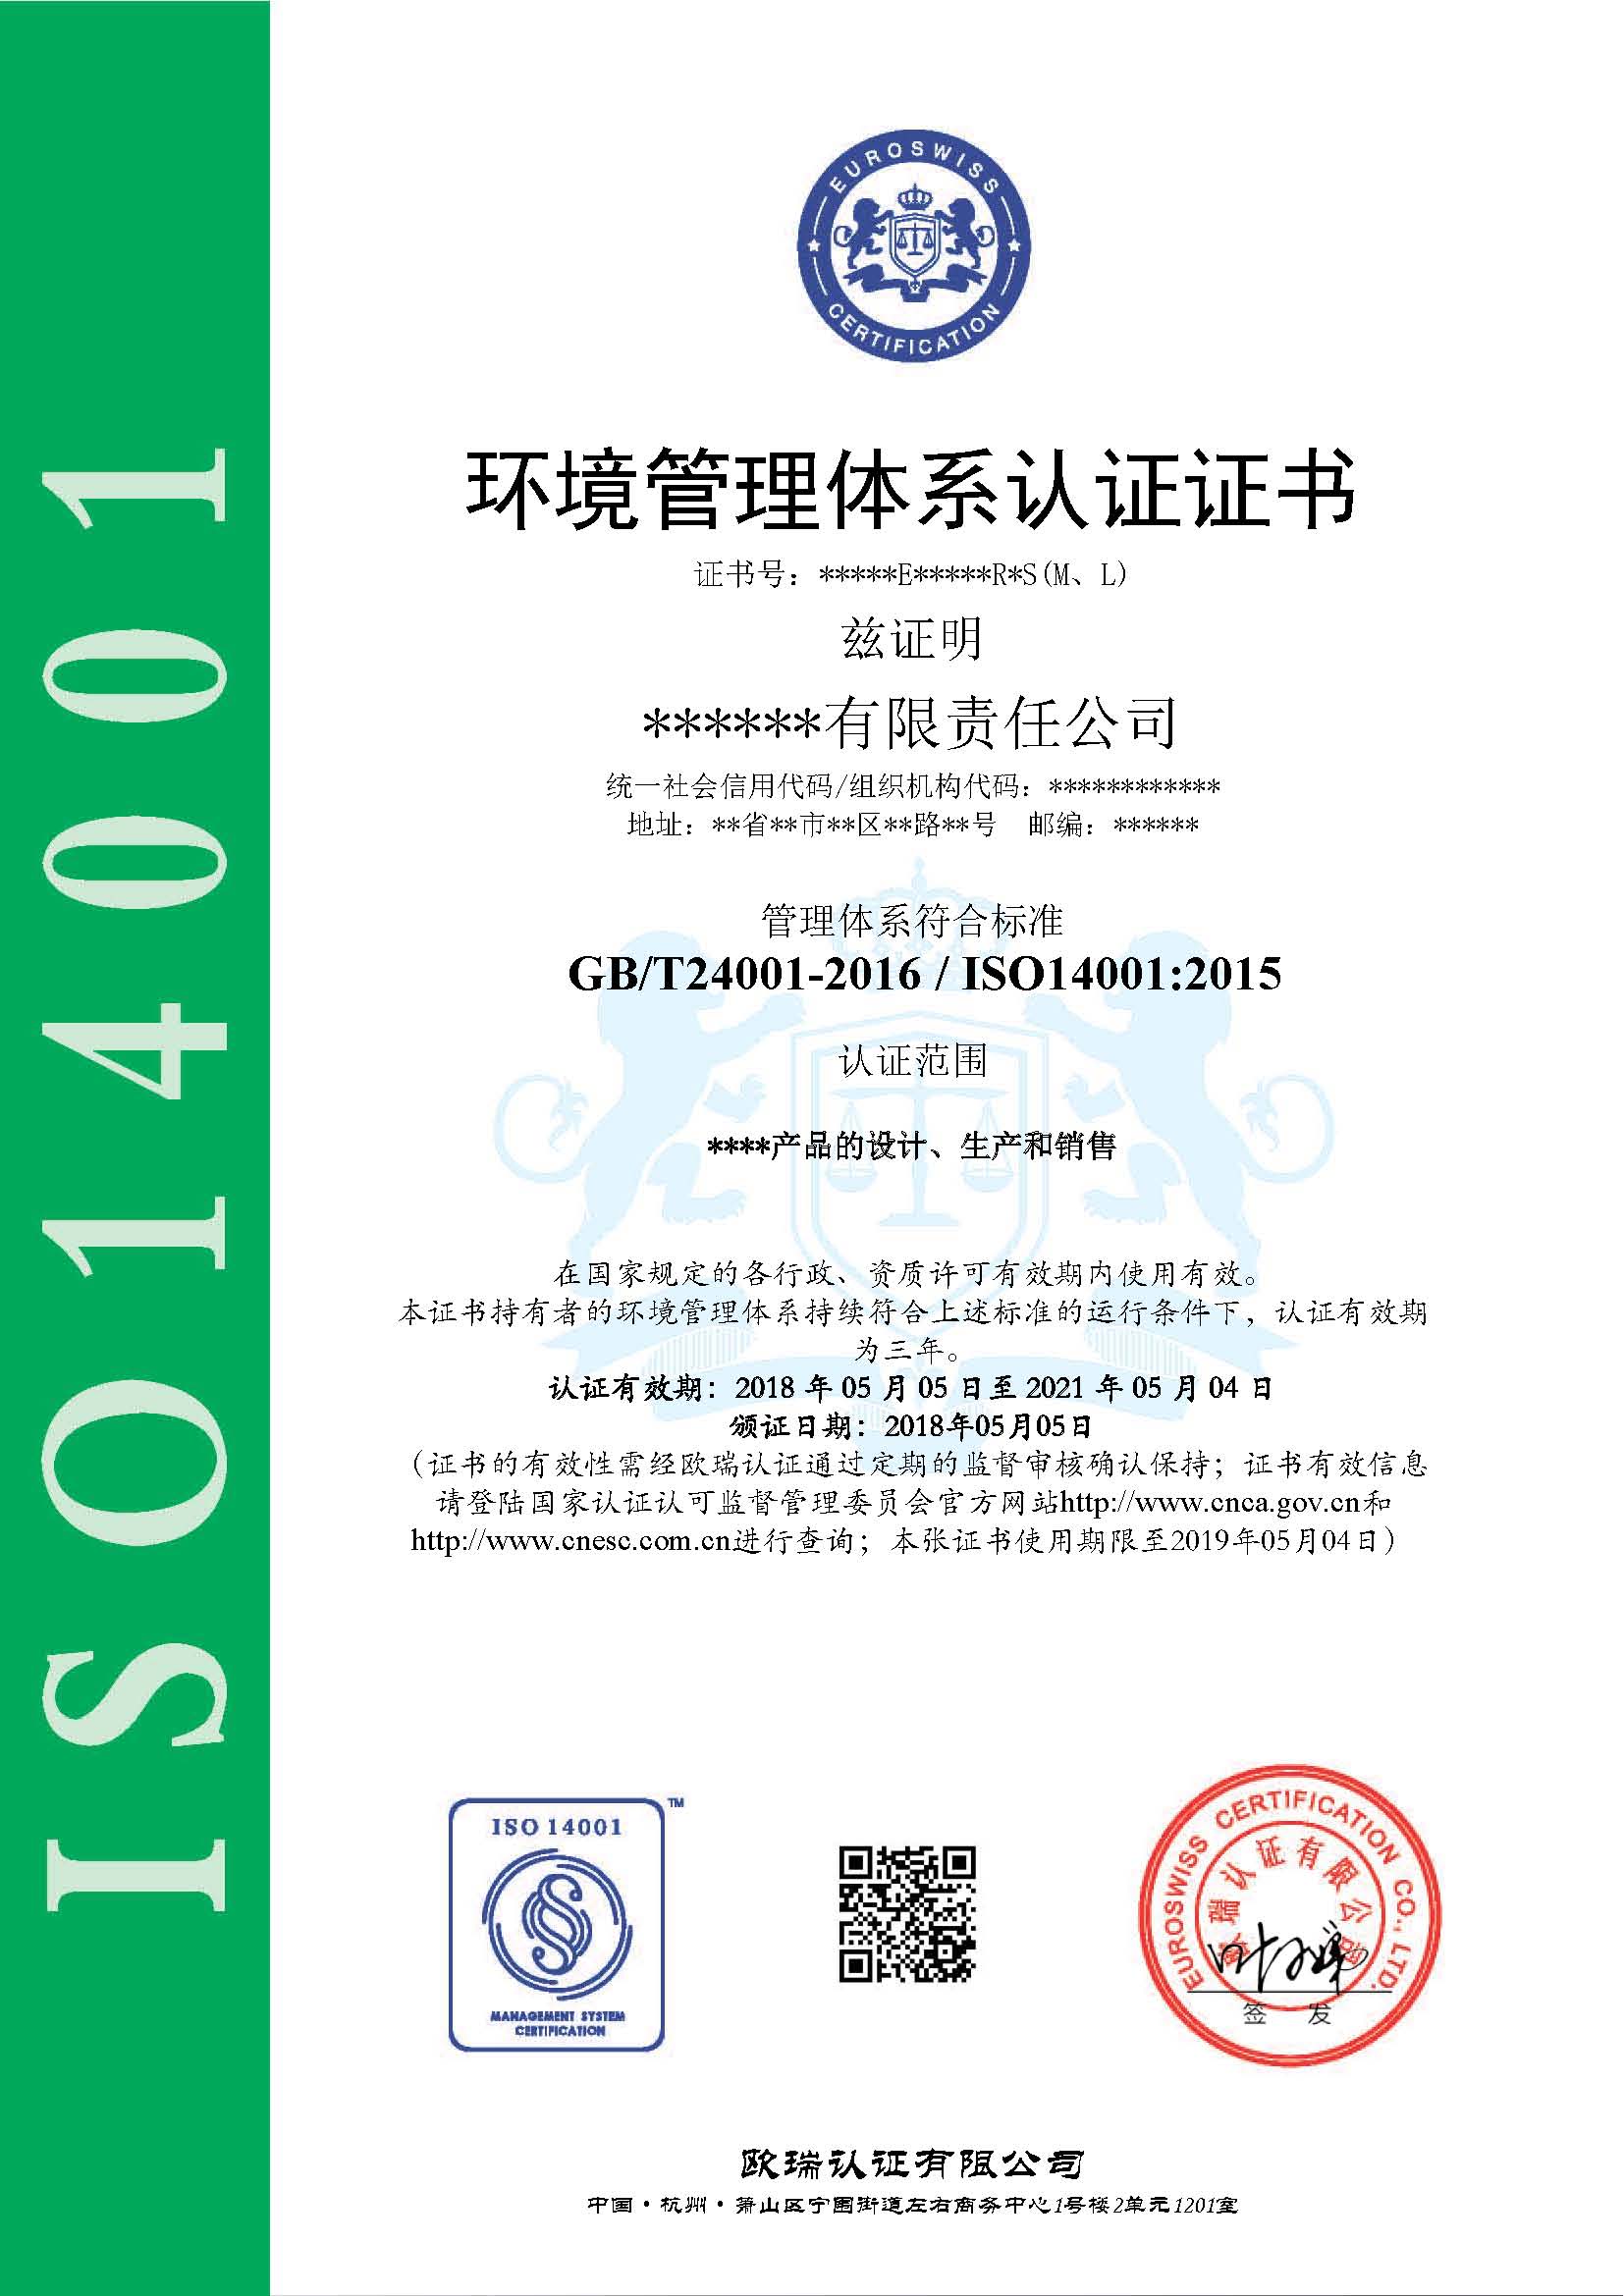 iso14001 - 欧瑞认证有限公司